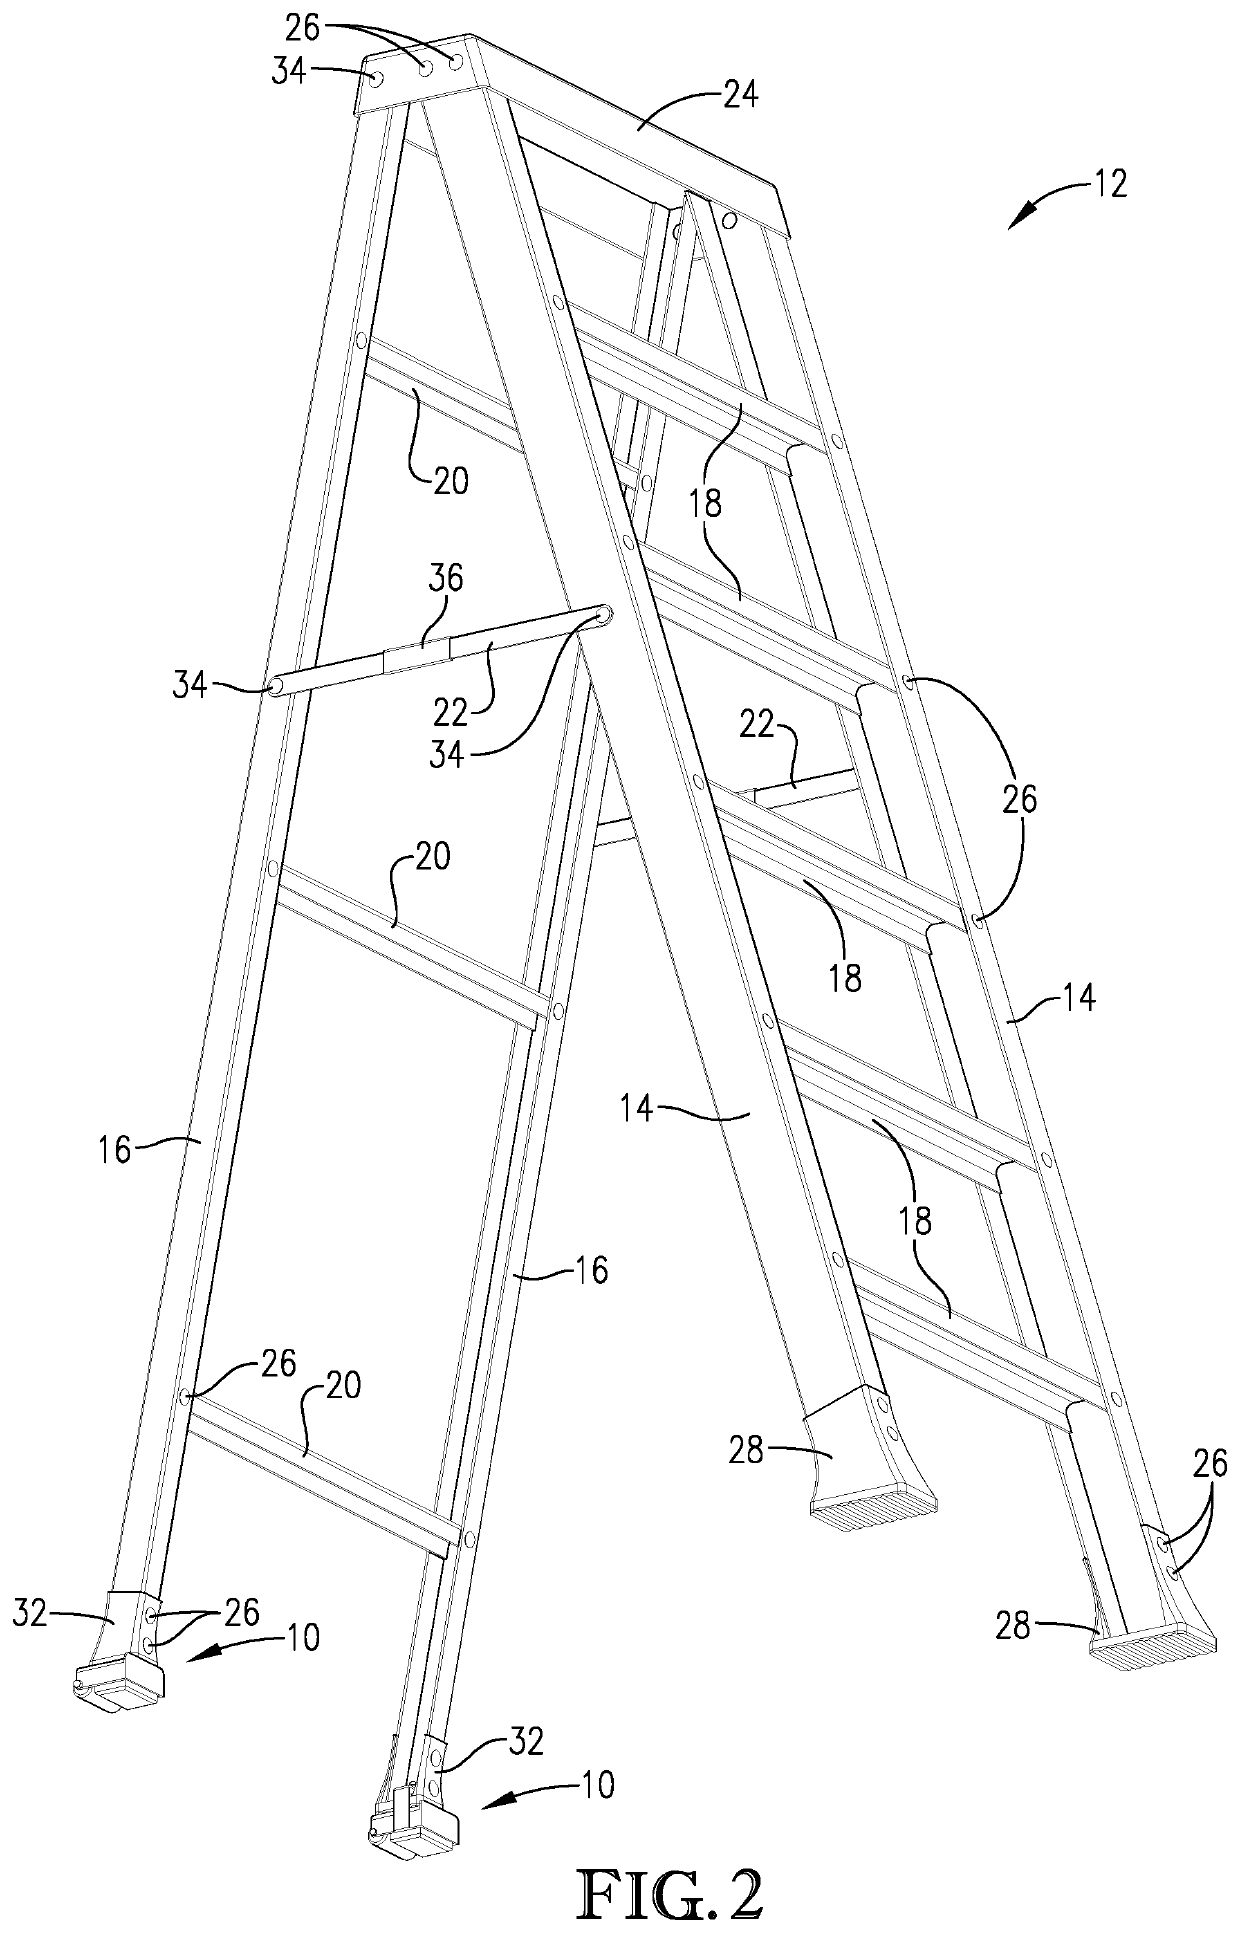 Ladder support apparatus